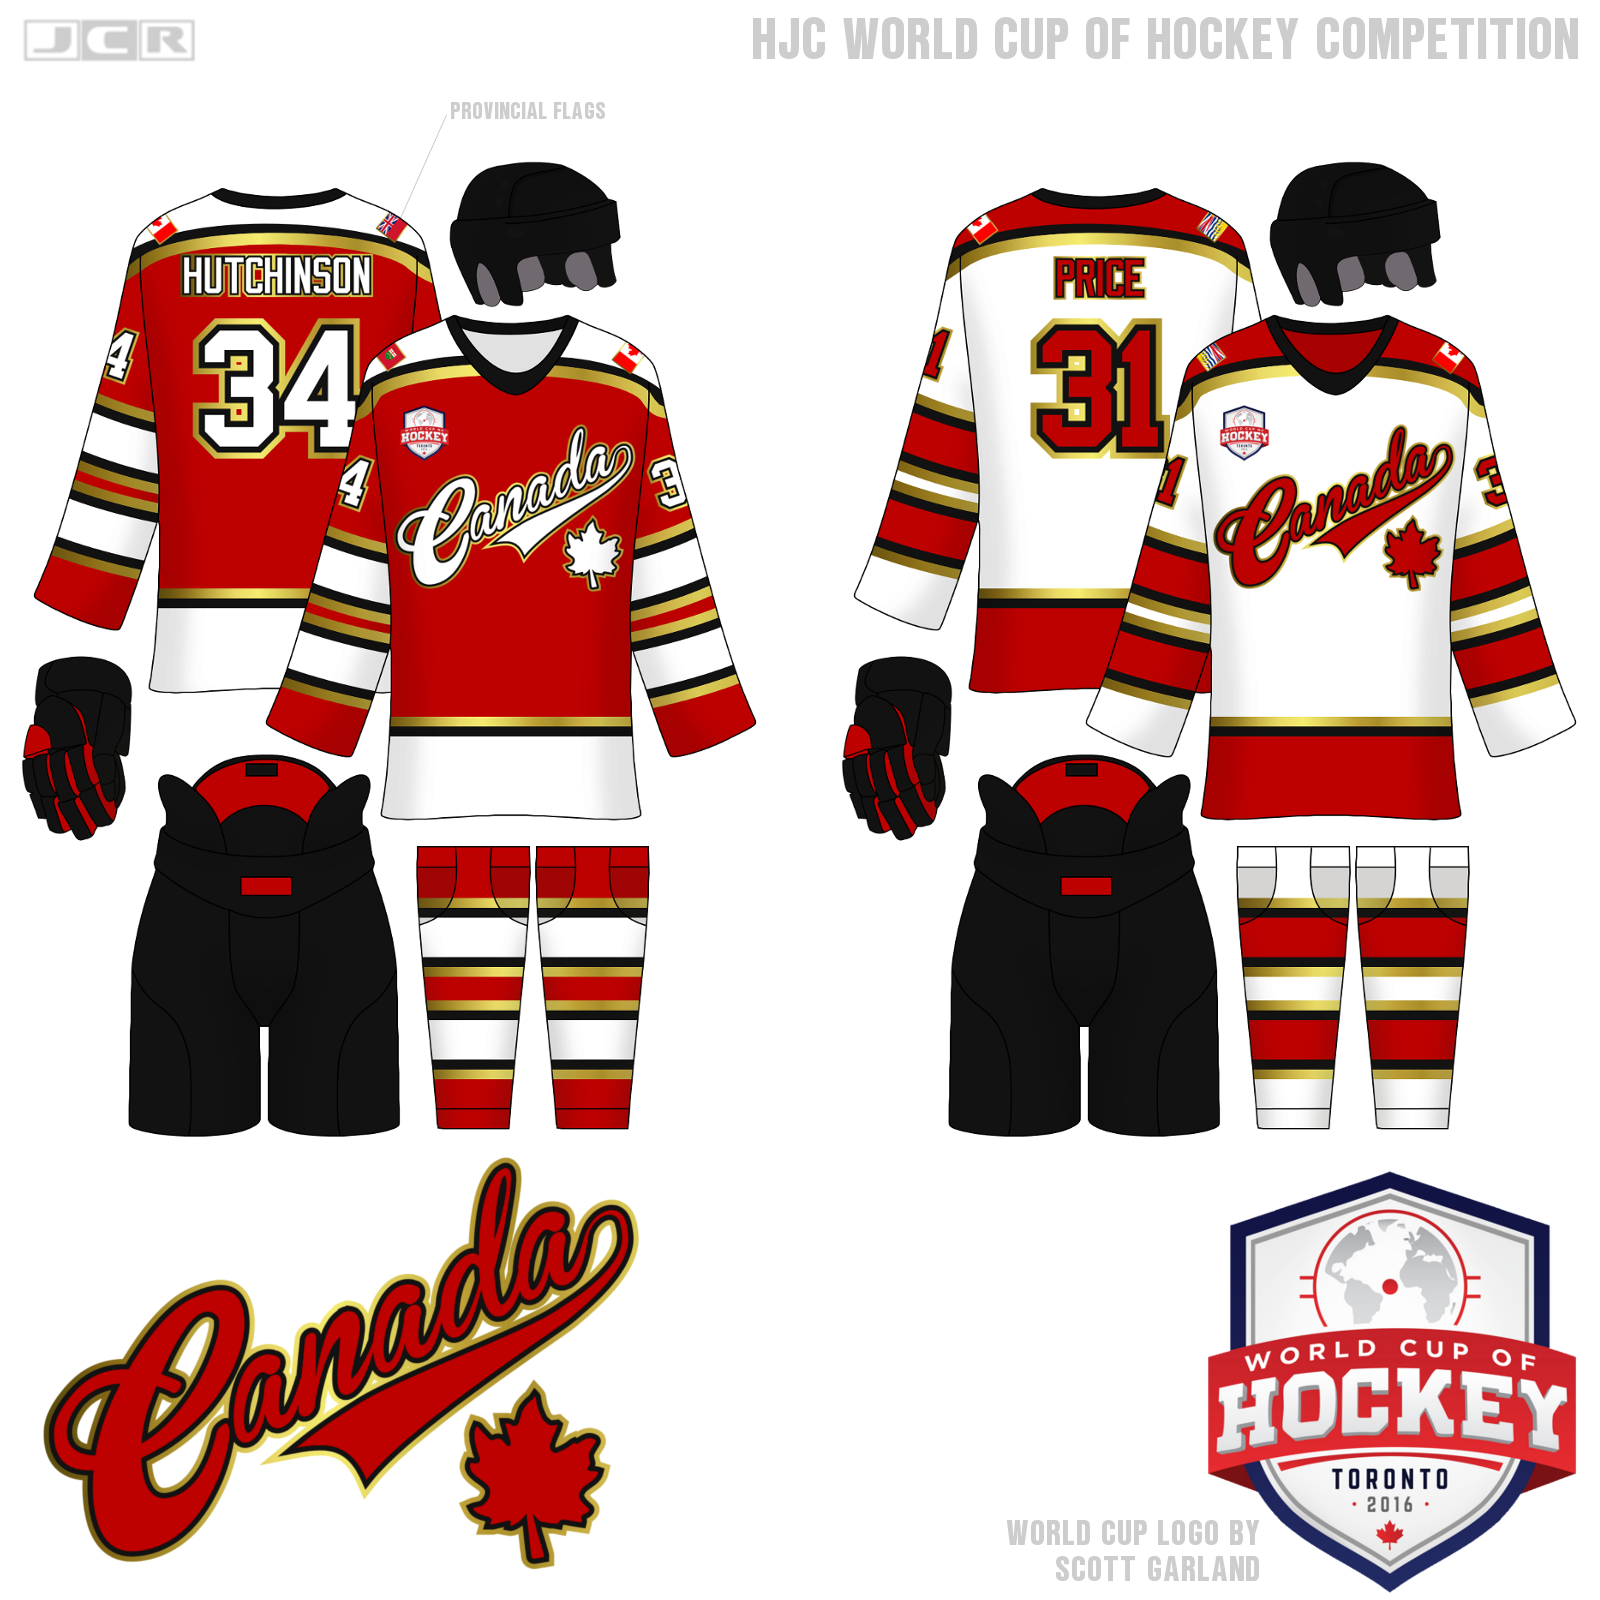 NHL JERSEY TEMPLATES - Concepts - Chris Creamer's Sports Logos Community -  CCSLC - SportsLogos.Net Forums